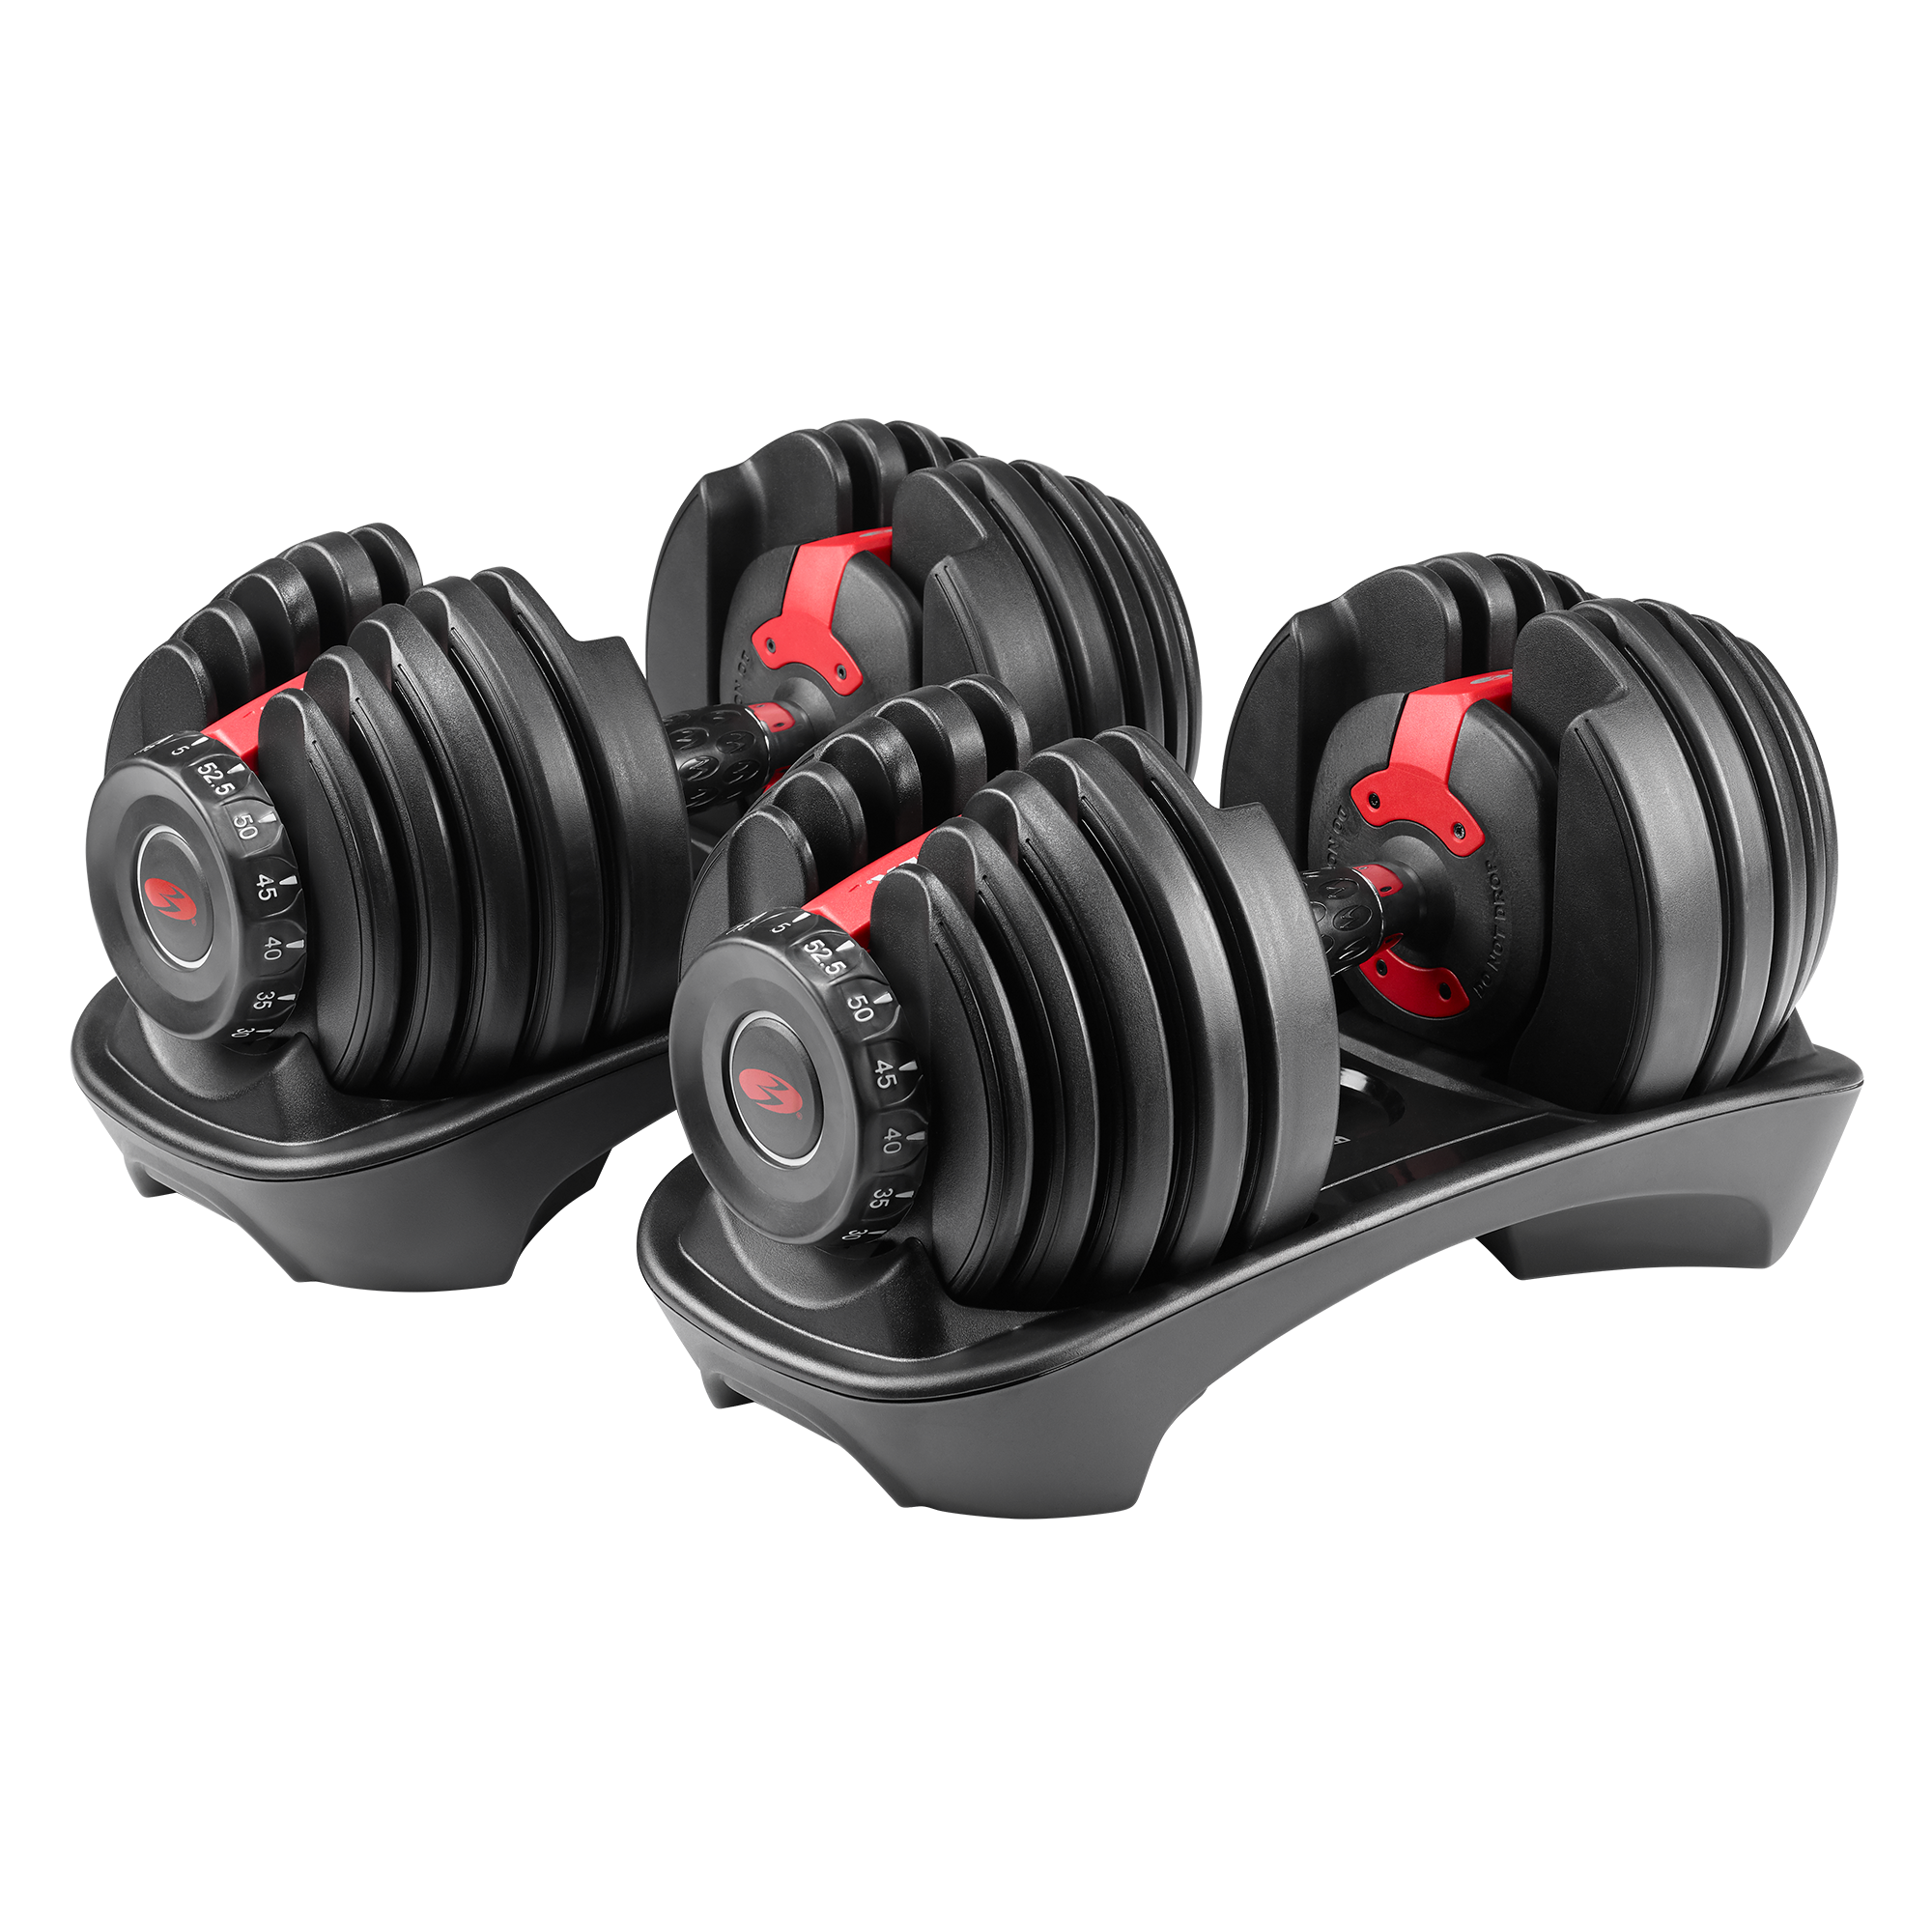 New Bowflex SelectTech 552 Adjustable Dumbbells Set Of 2 Dumbbell Weights Pair 